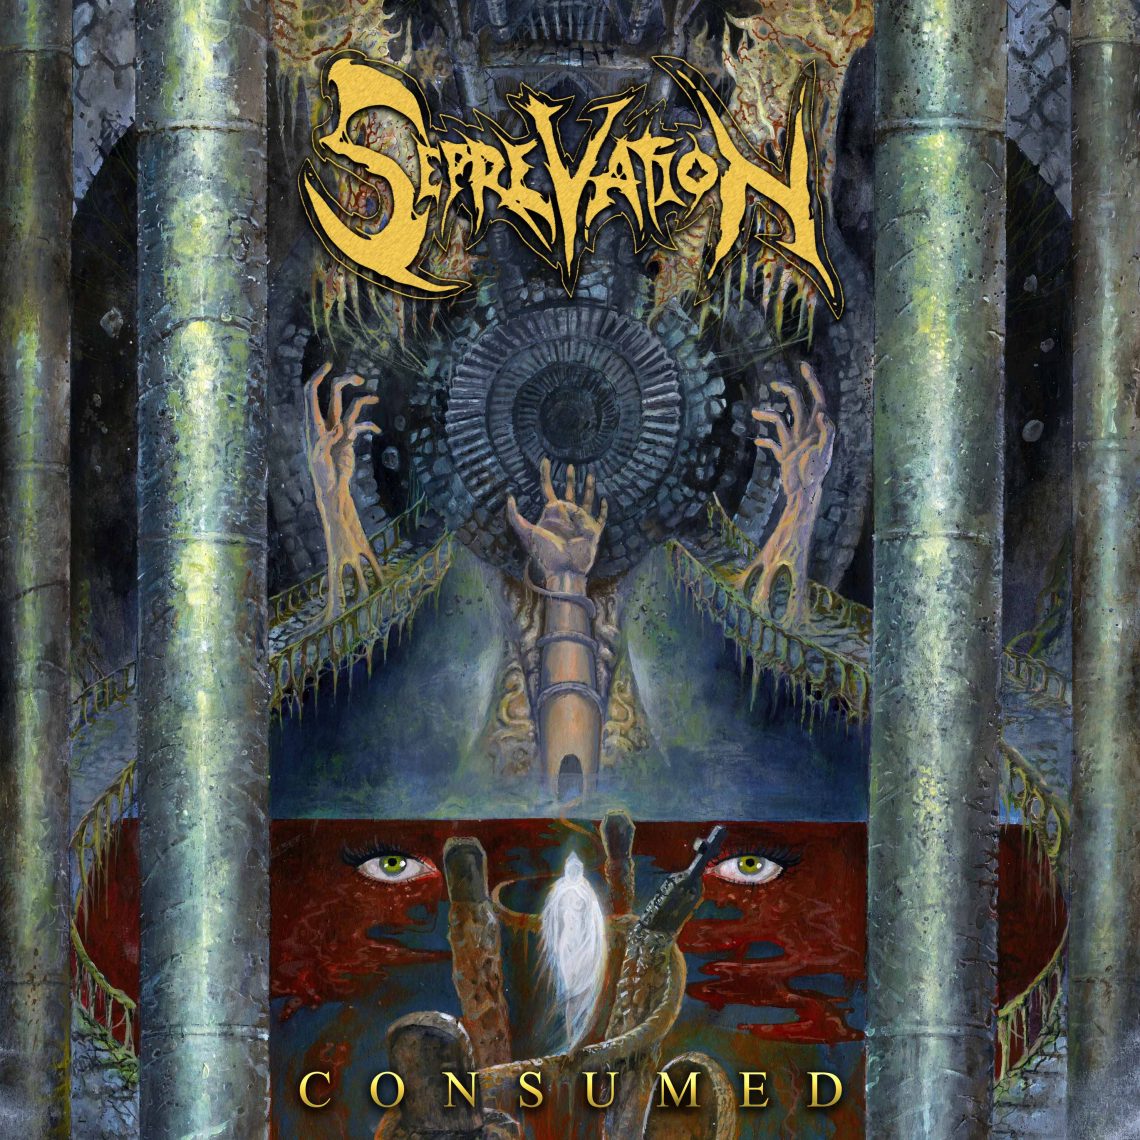 Seprevation – Consumed